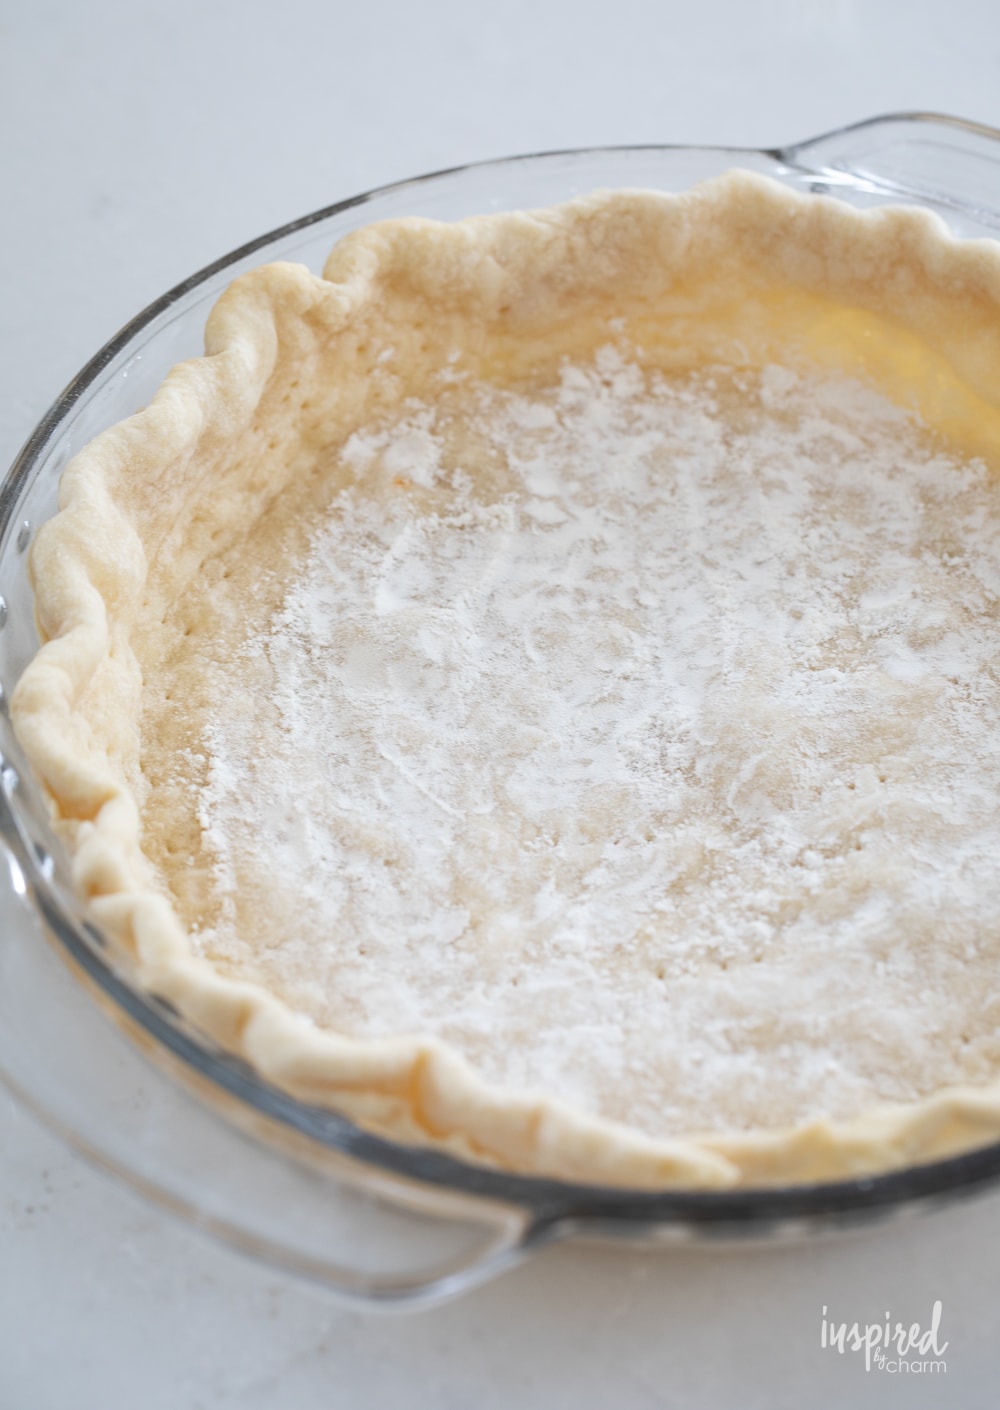 par baked quiche crust in clear pie pan.